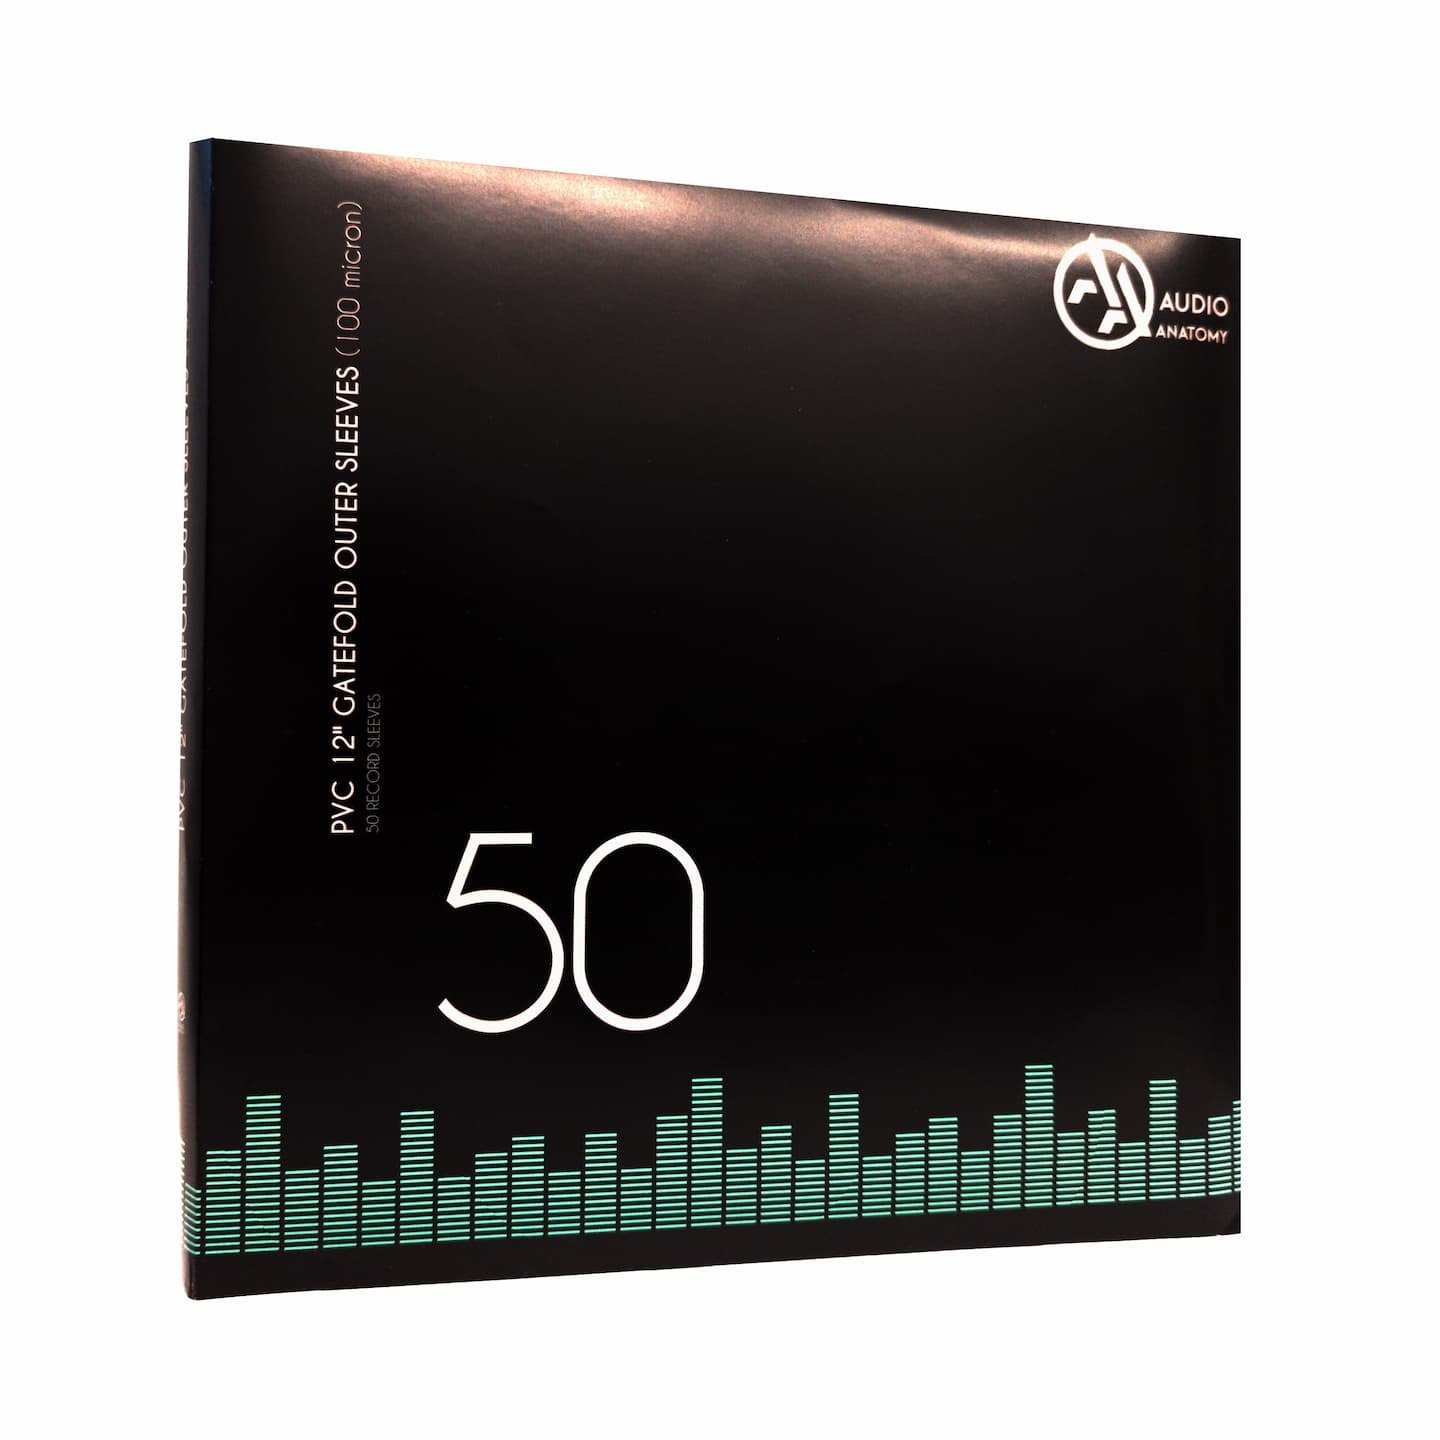 Внешние конверты Audio Anatomy 50 X PVC 12" GATEFOLD OUTER SLEEVES - 100 MICRON